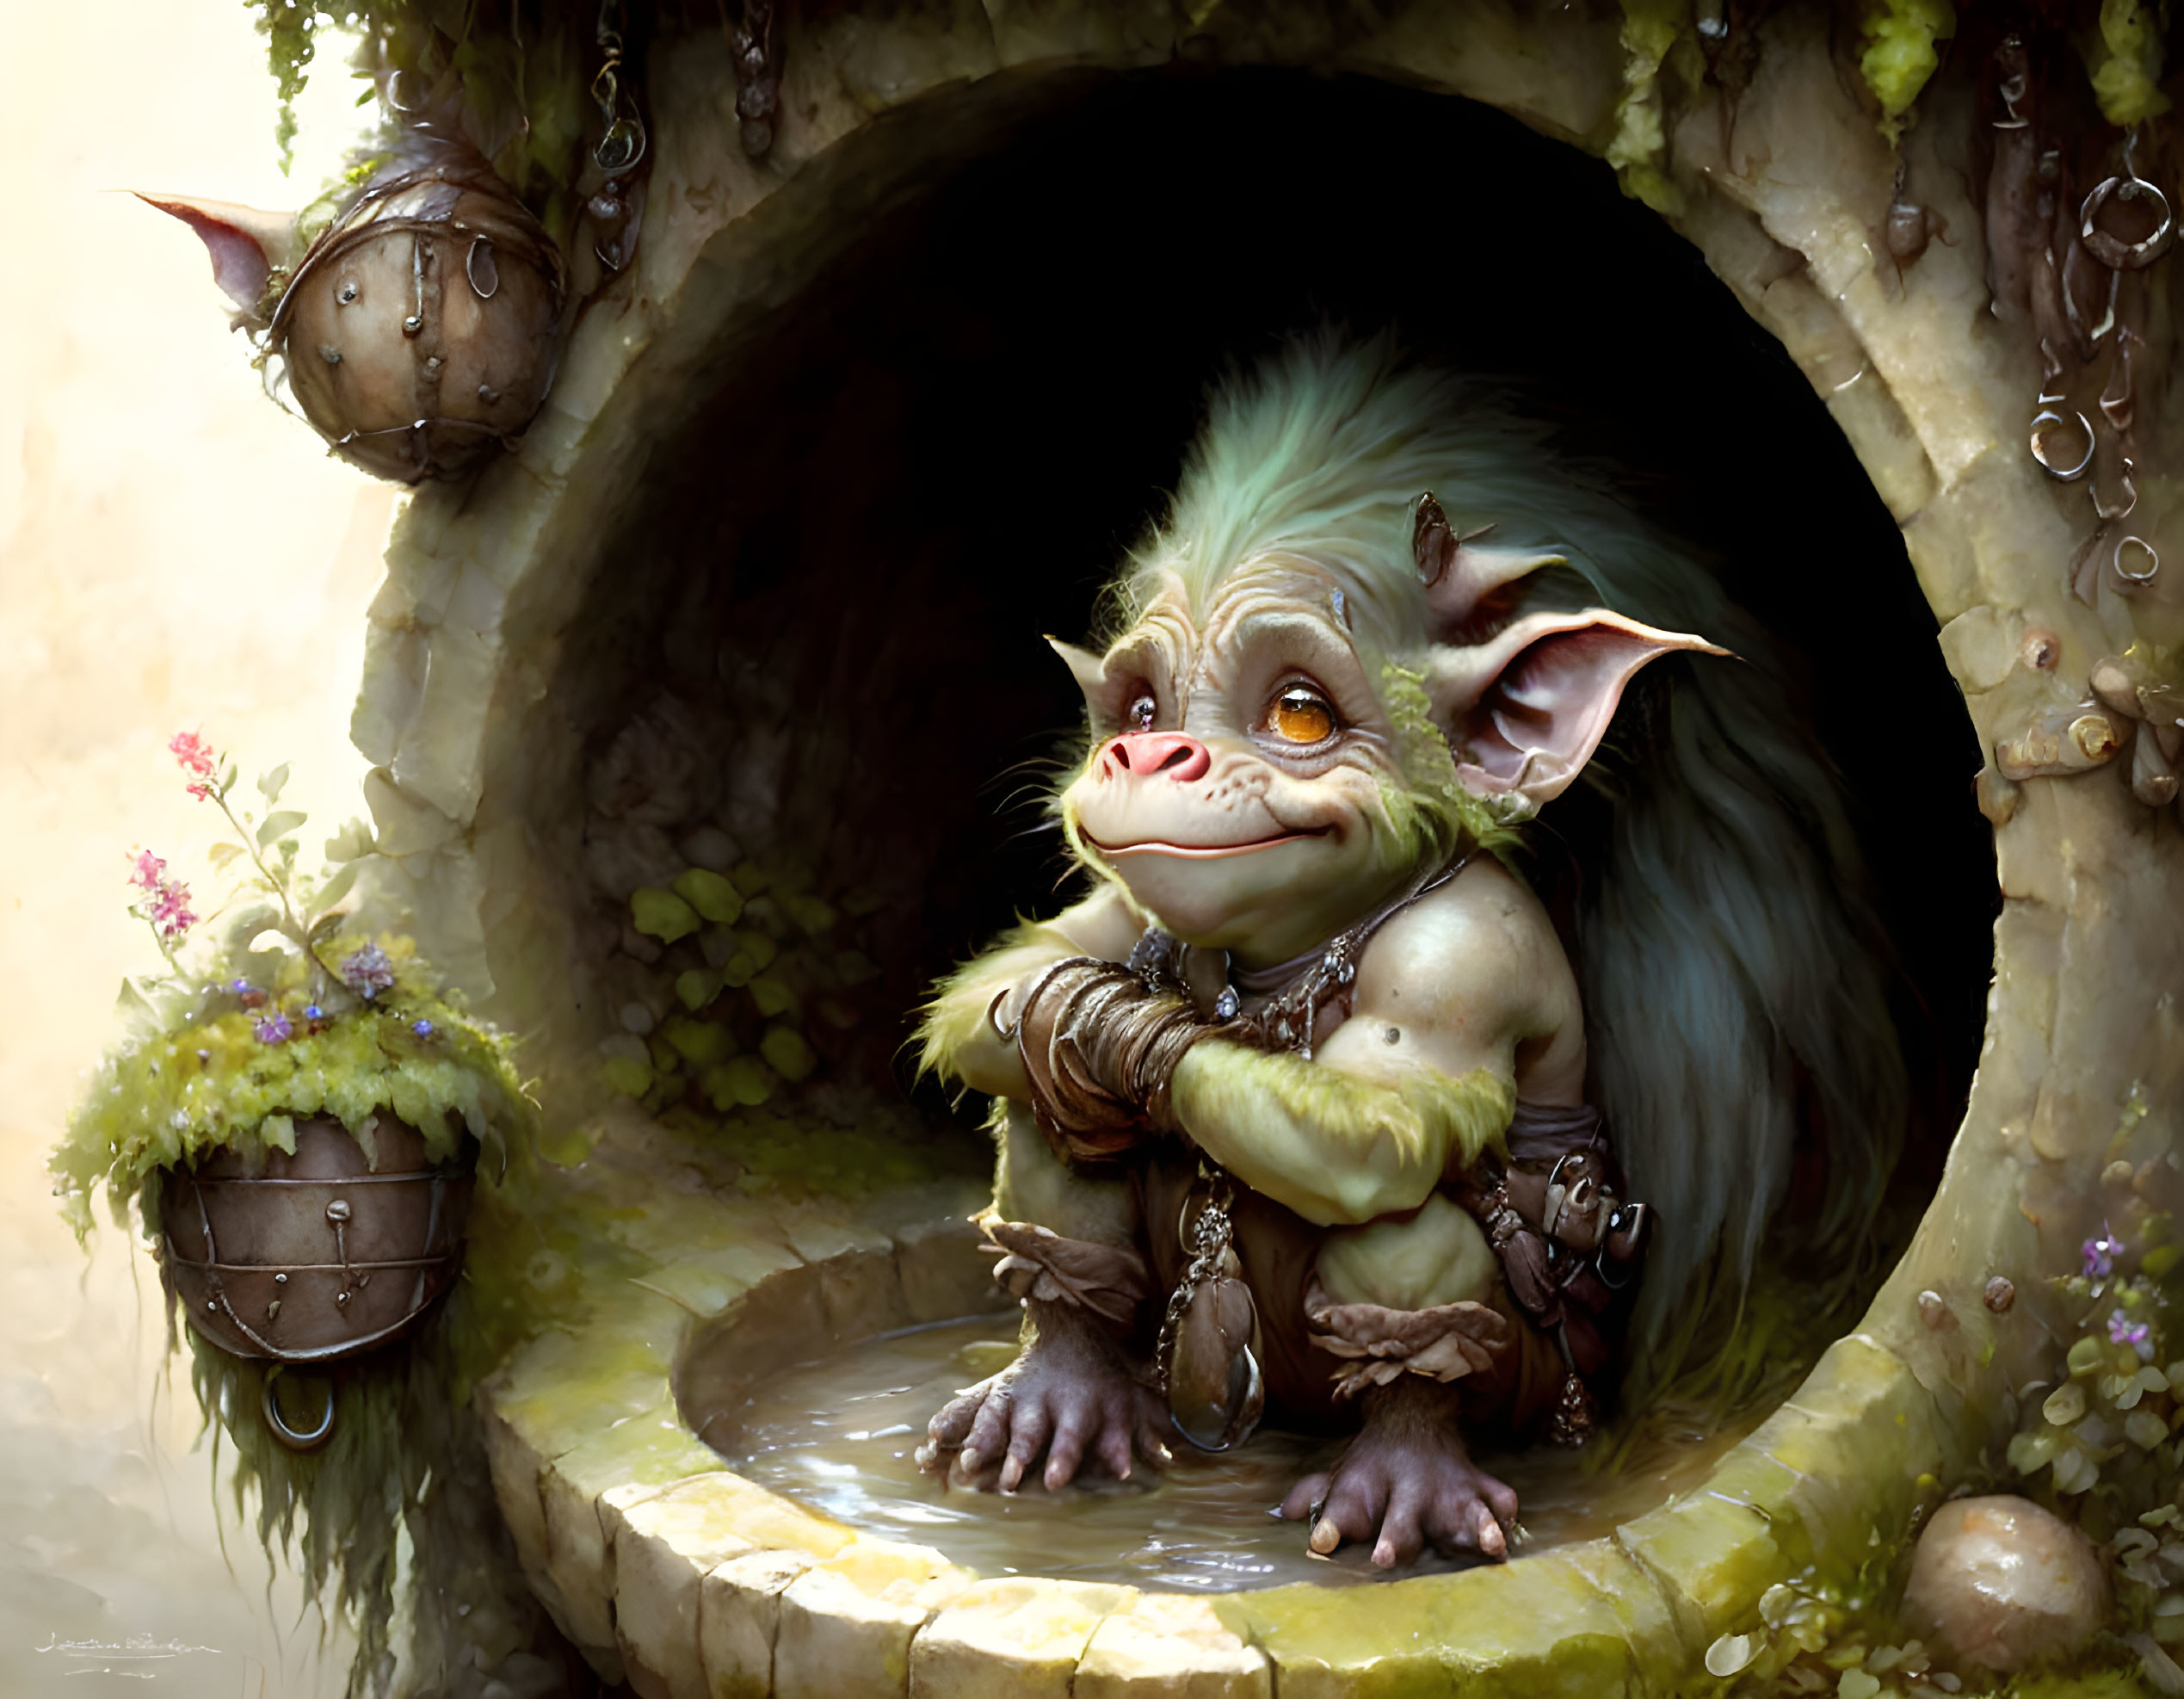 Cute hairy goblin troll sitting in a well